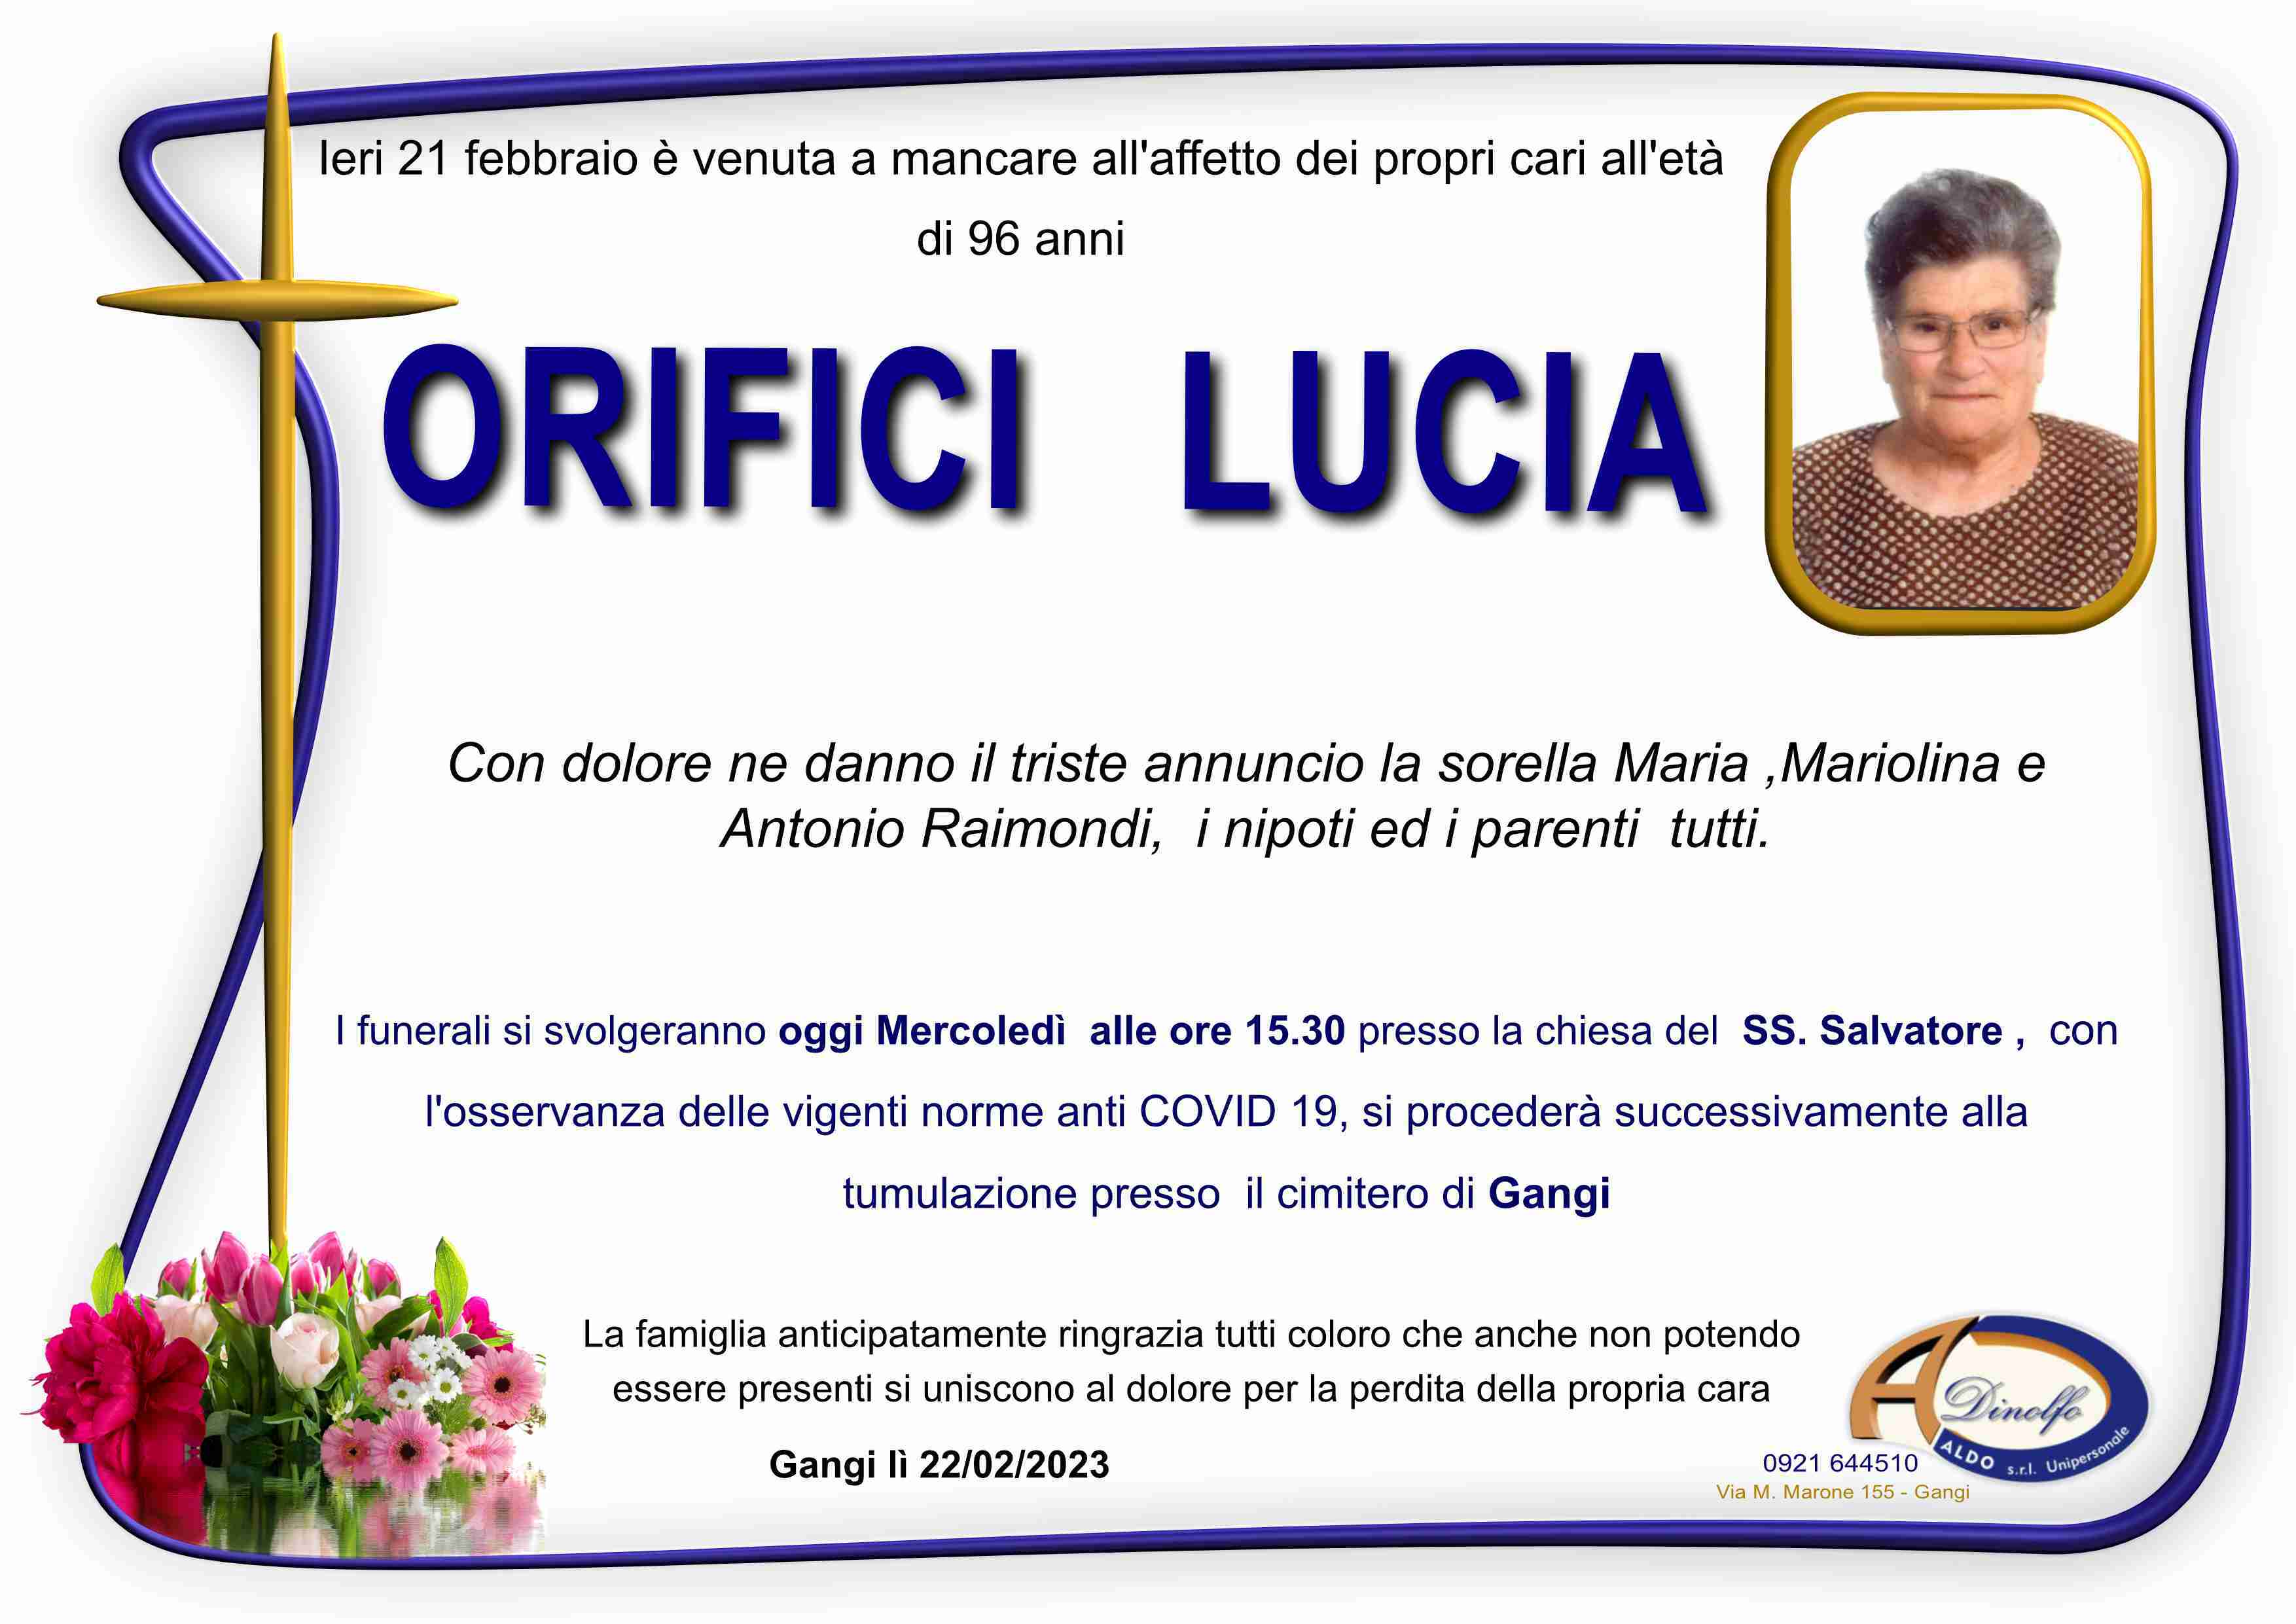 Lucia Orifici